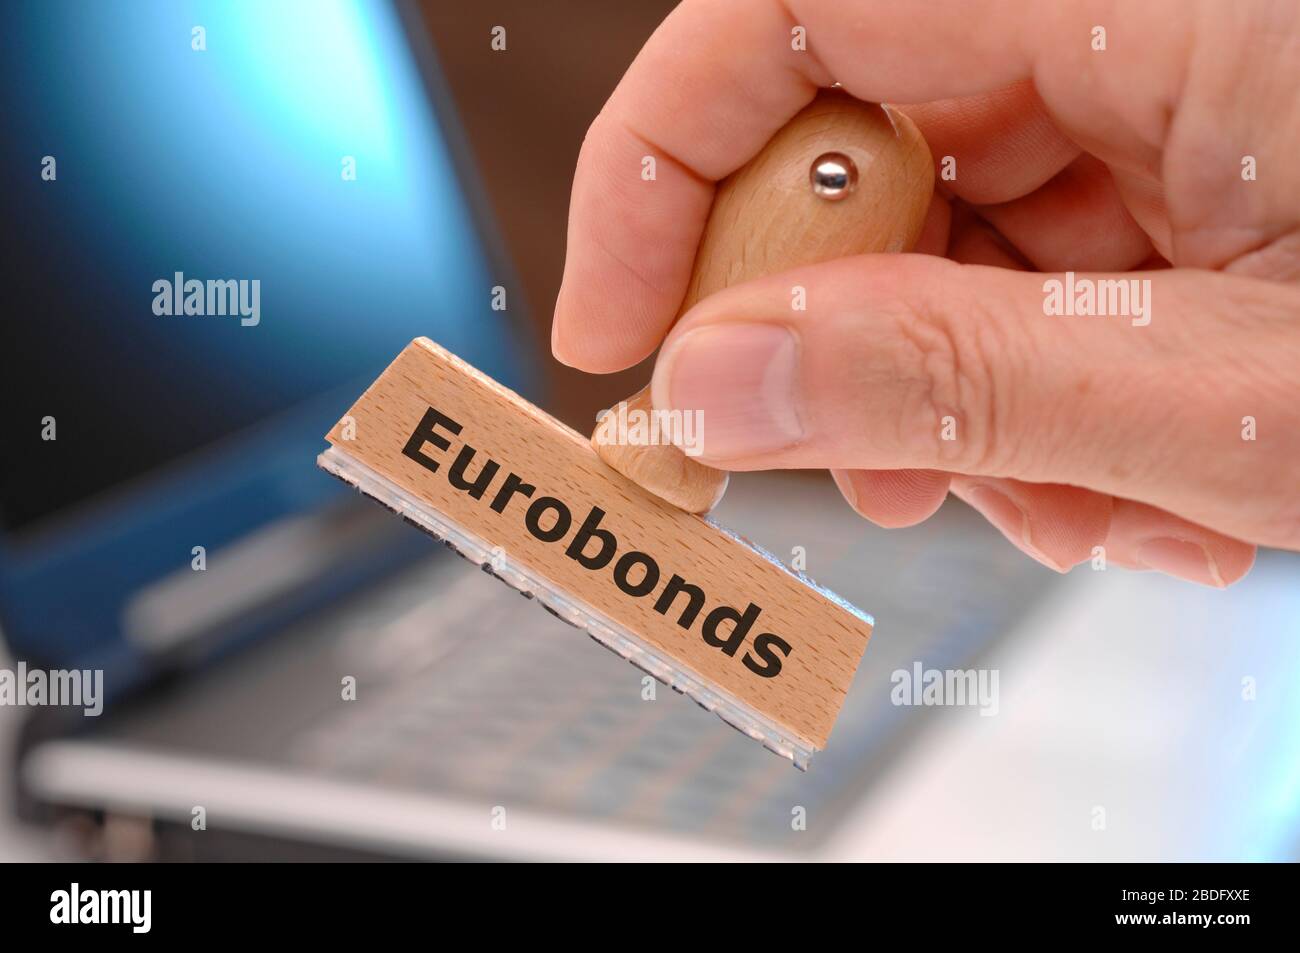 Eurobonds oder Corona-Bonds zur Finanzierung der Corona-Krise Stock Photo